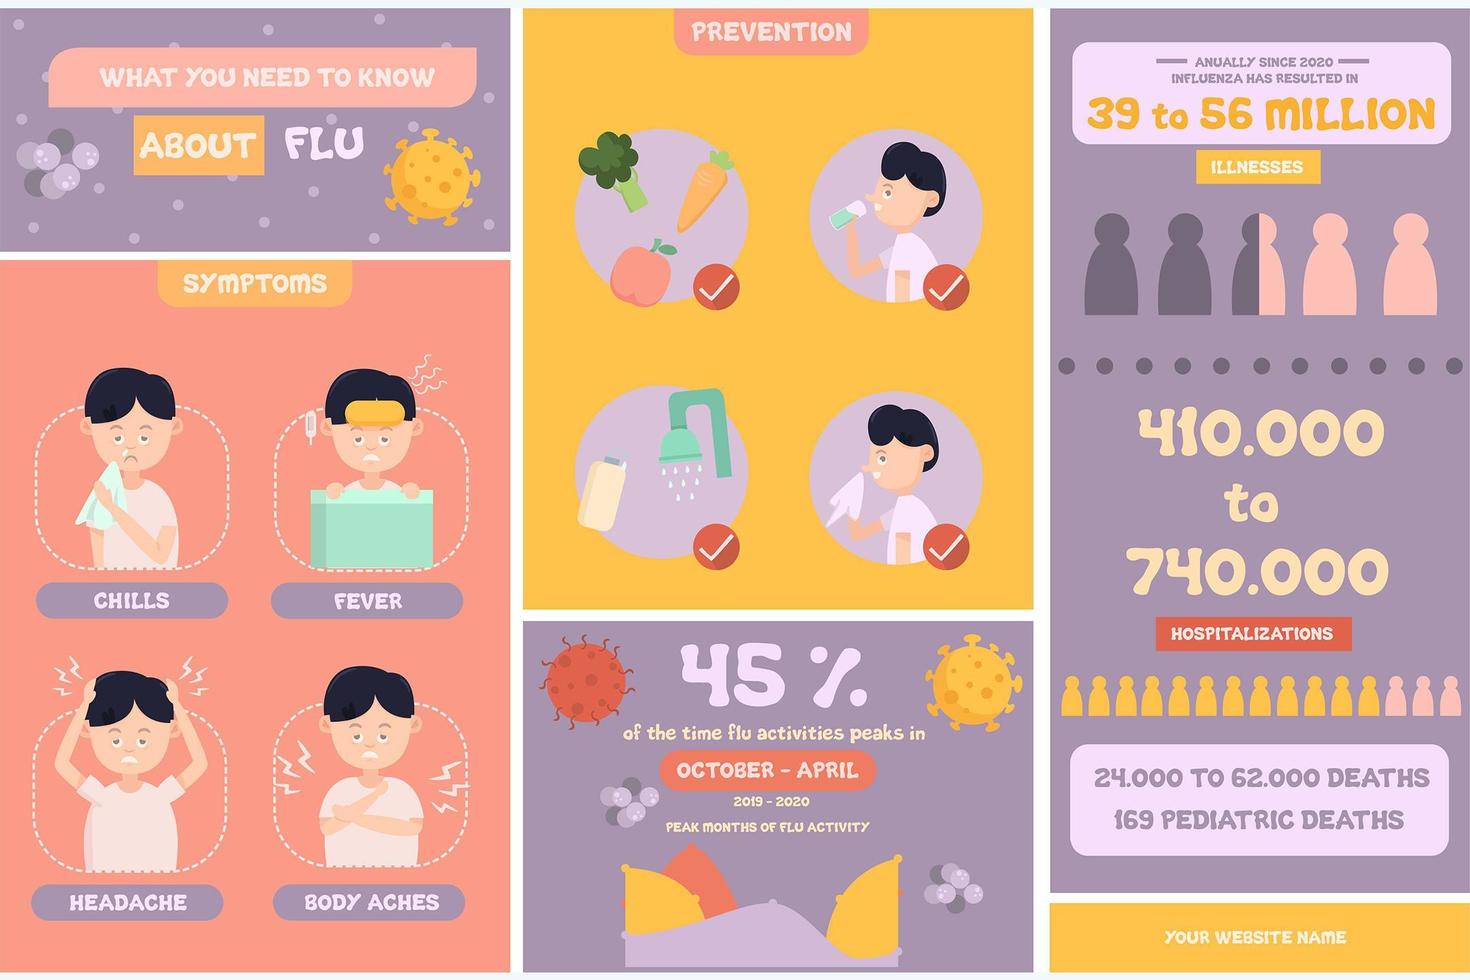 Flu Information Infographic vector